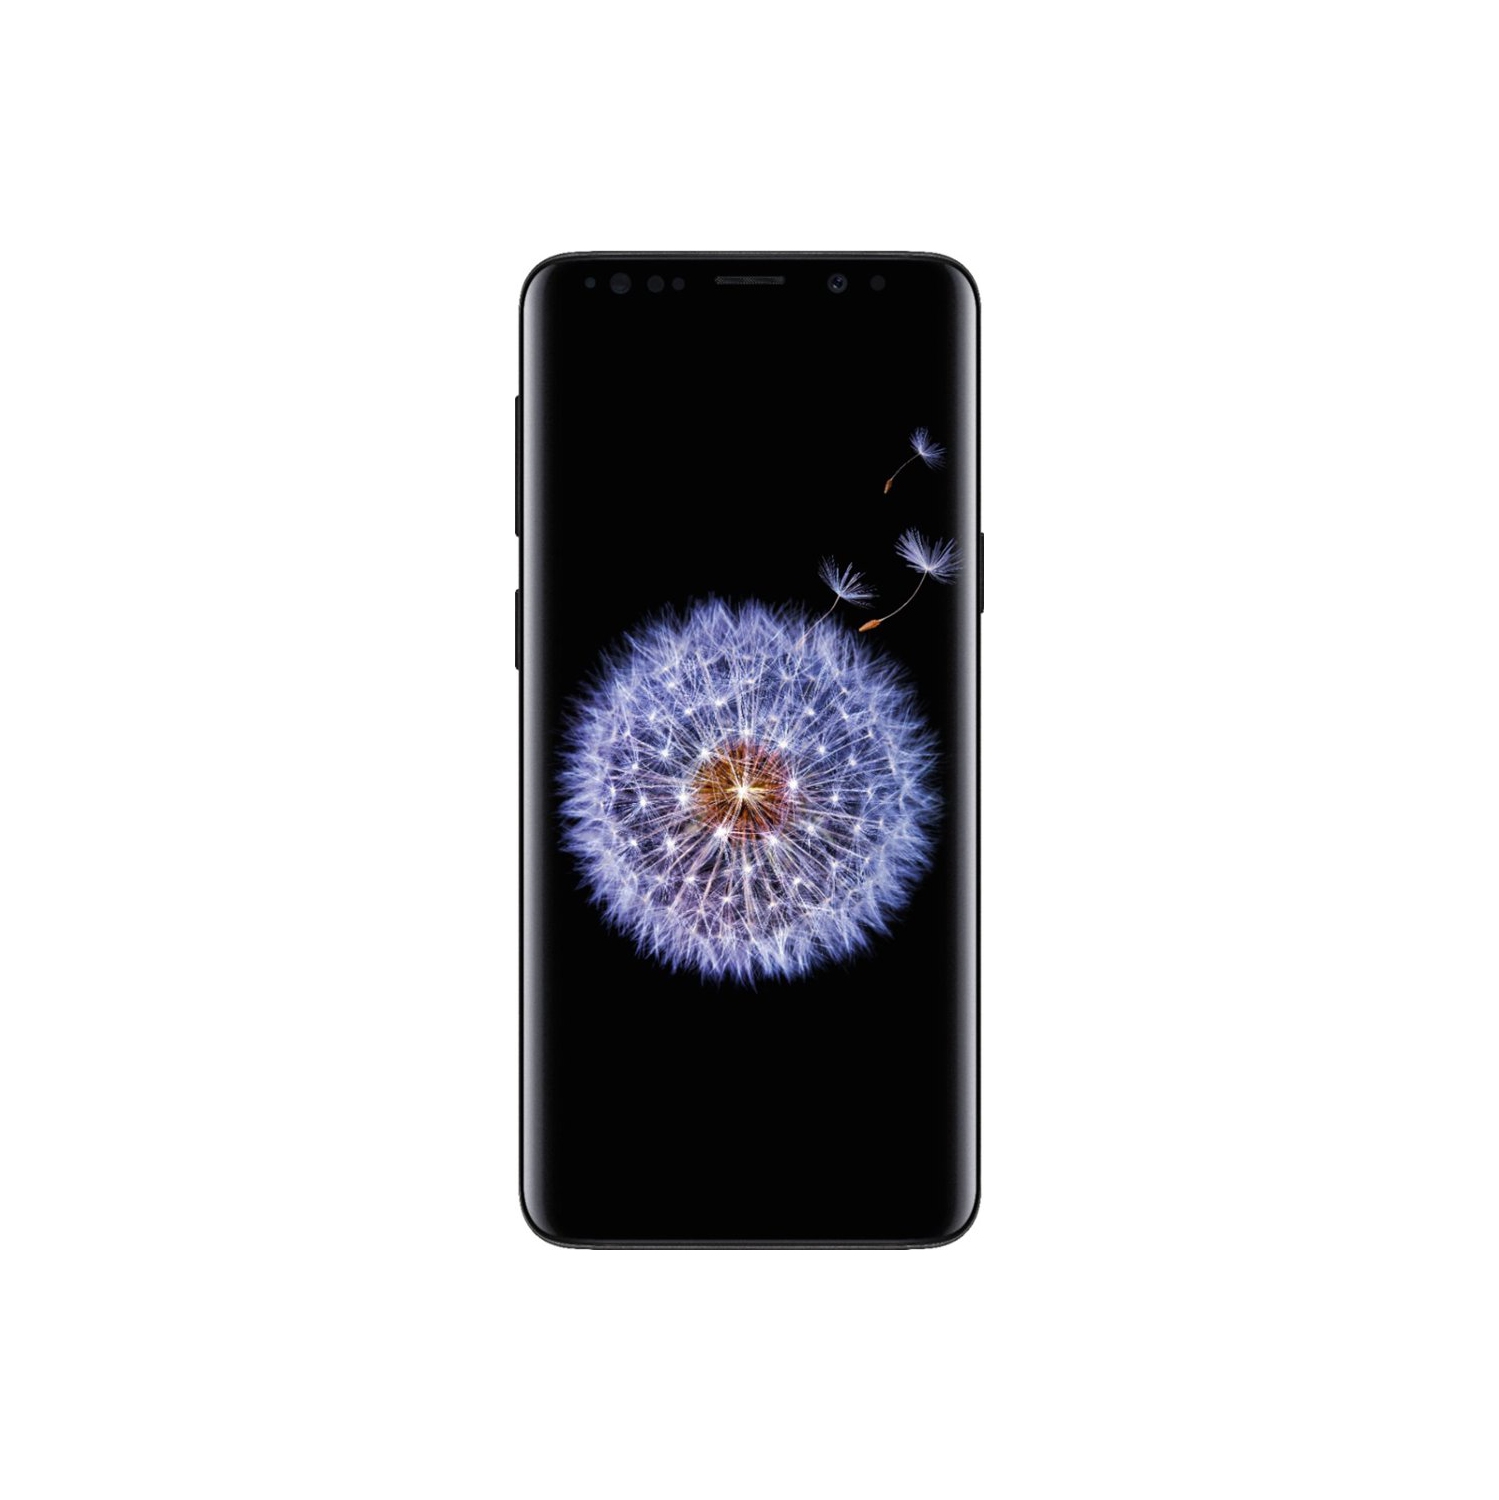 Refurbished (Good) - Samsung Galaxy S9 64GB Smartphone - Midnight